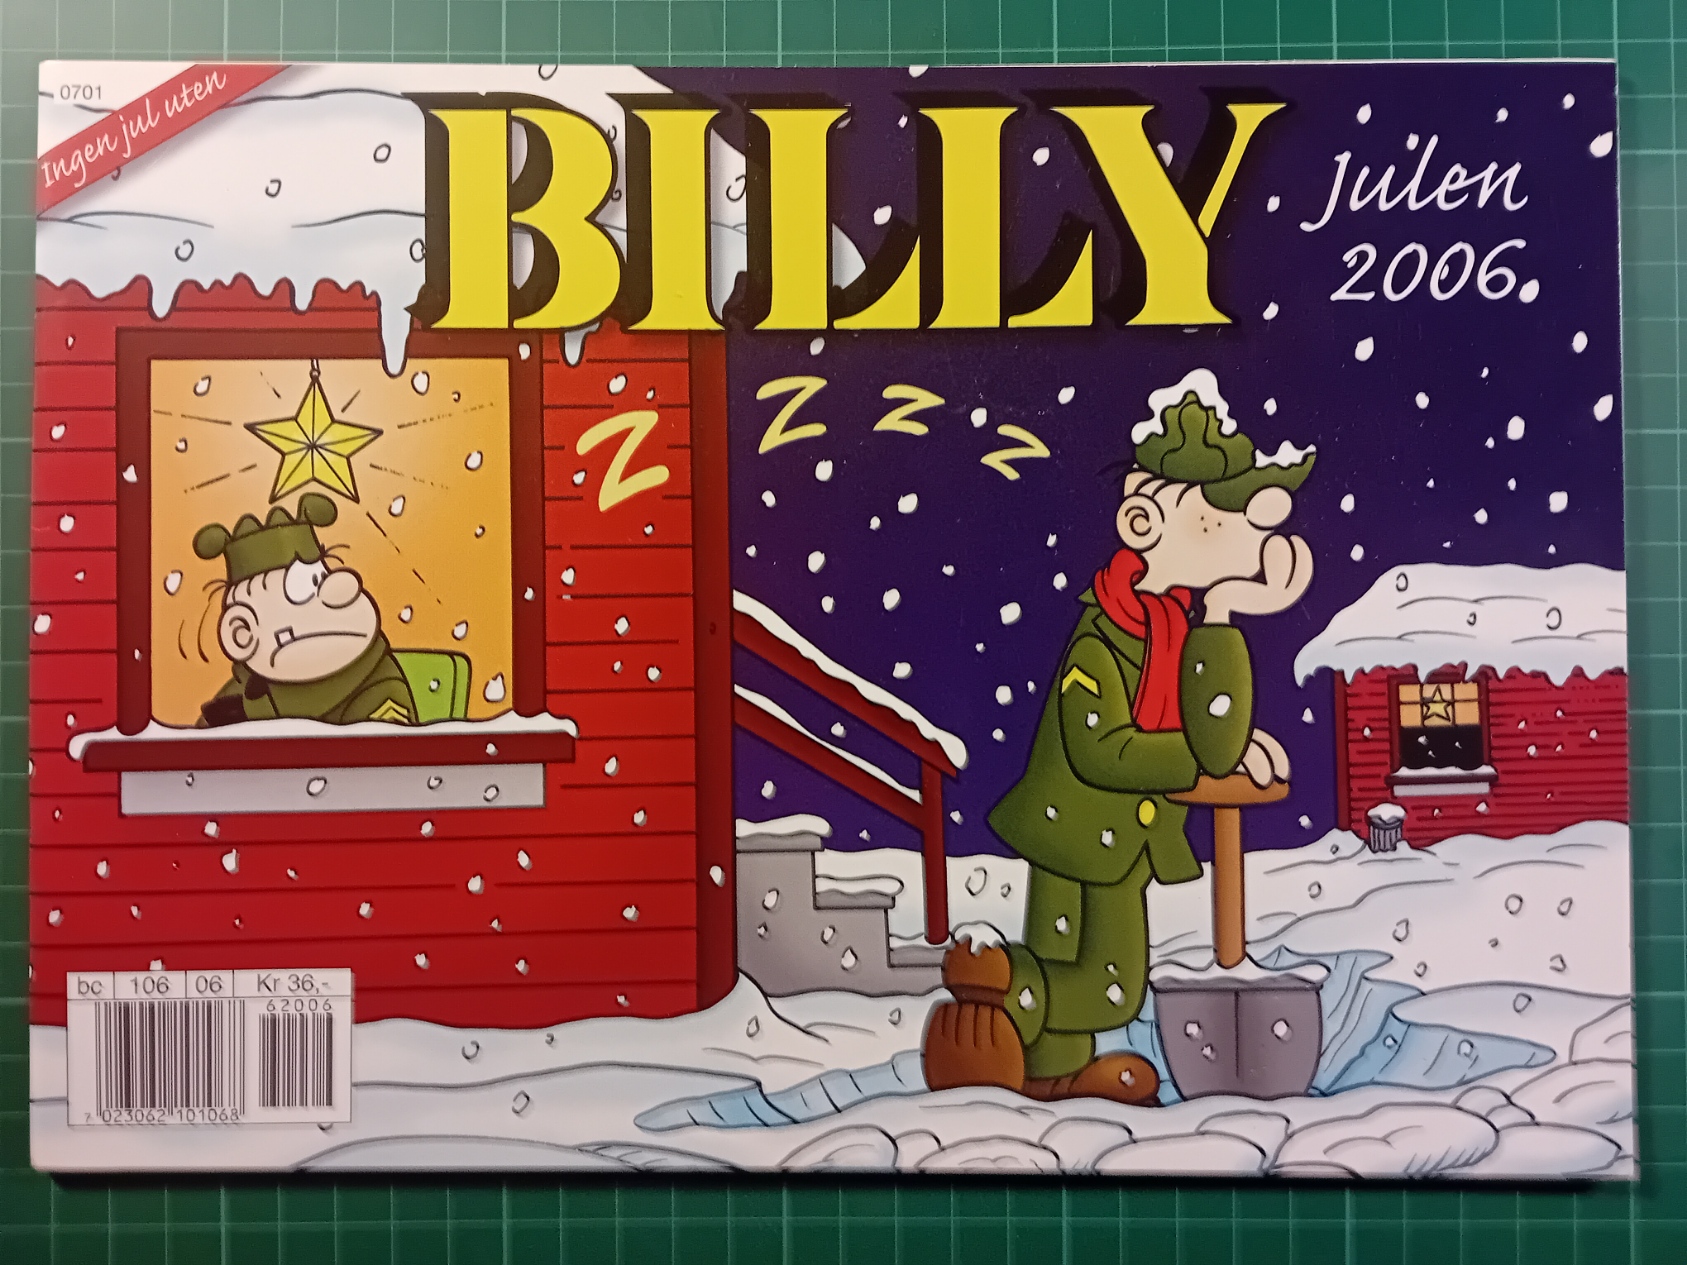 Billy Julen 2006